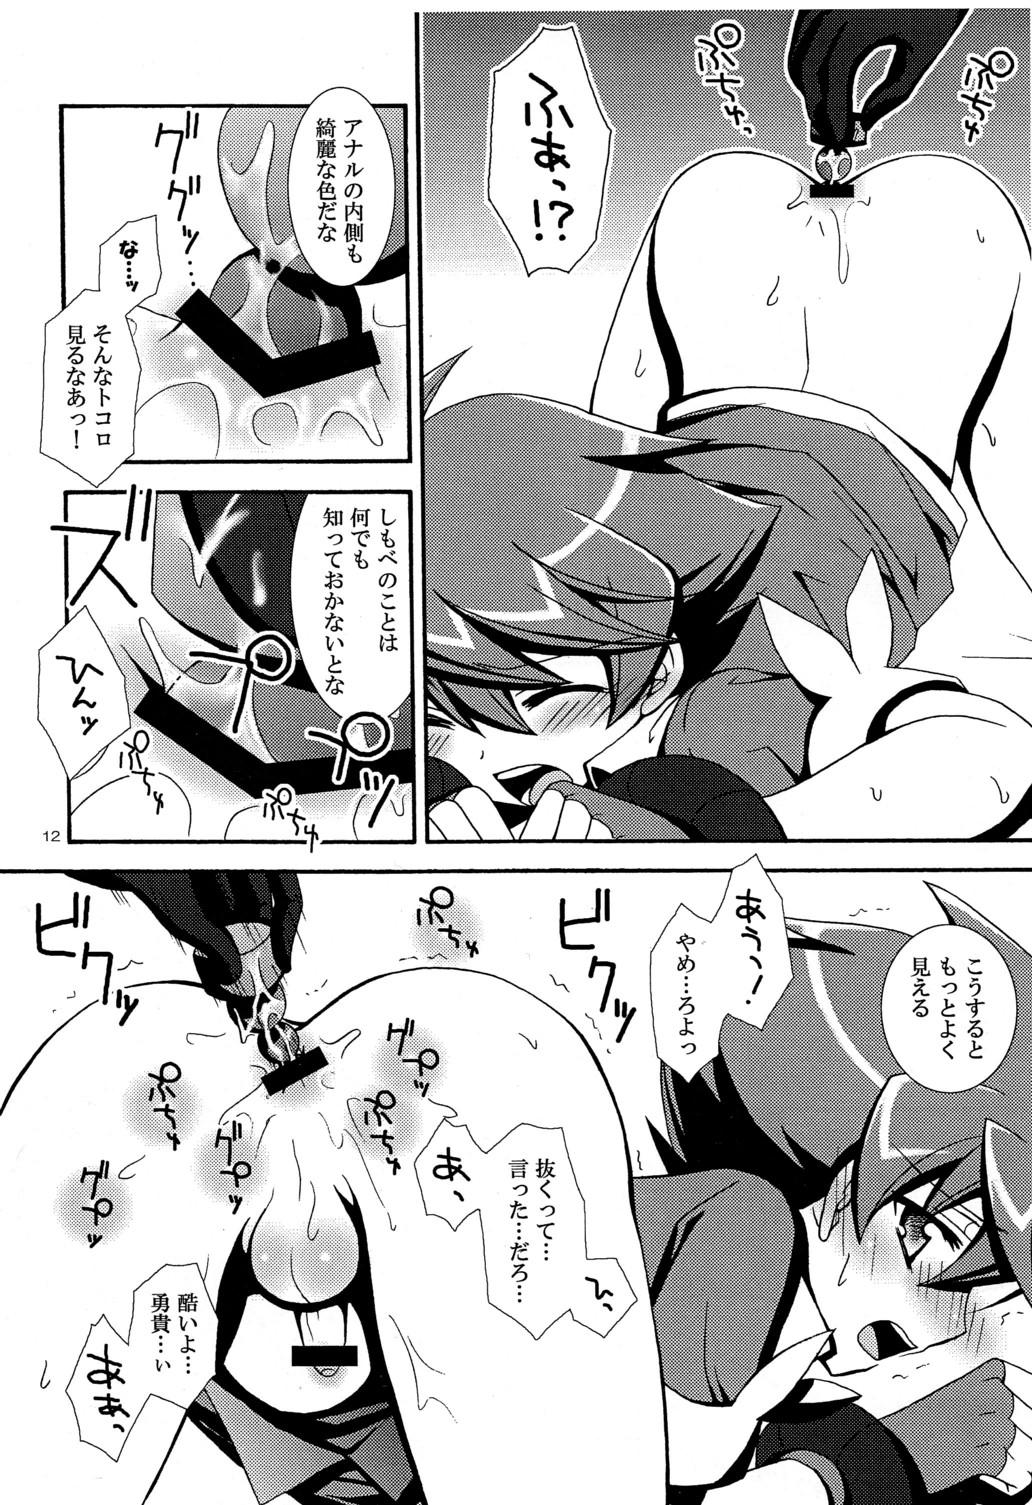 Sucks Ore no Shimobe - Battle spirits Desperate - Page 12